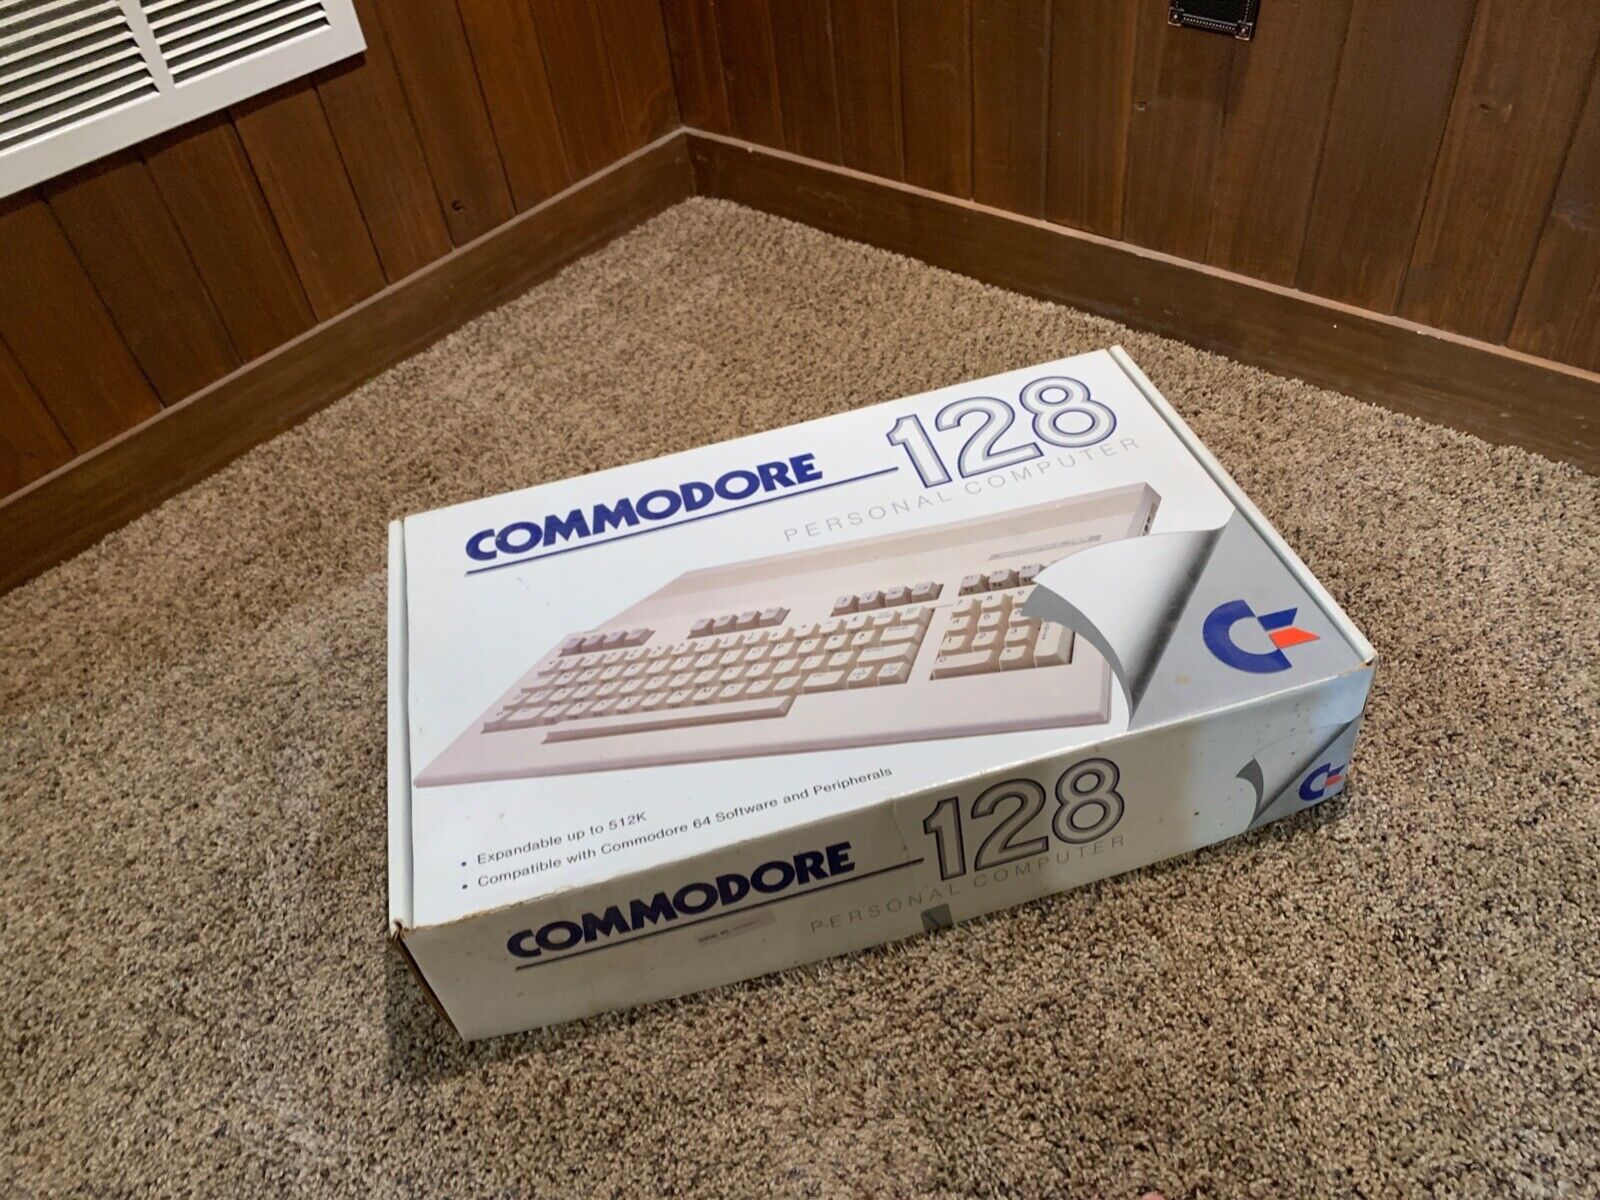 Vintage - Commodore 128 computer in original box